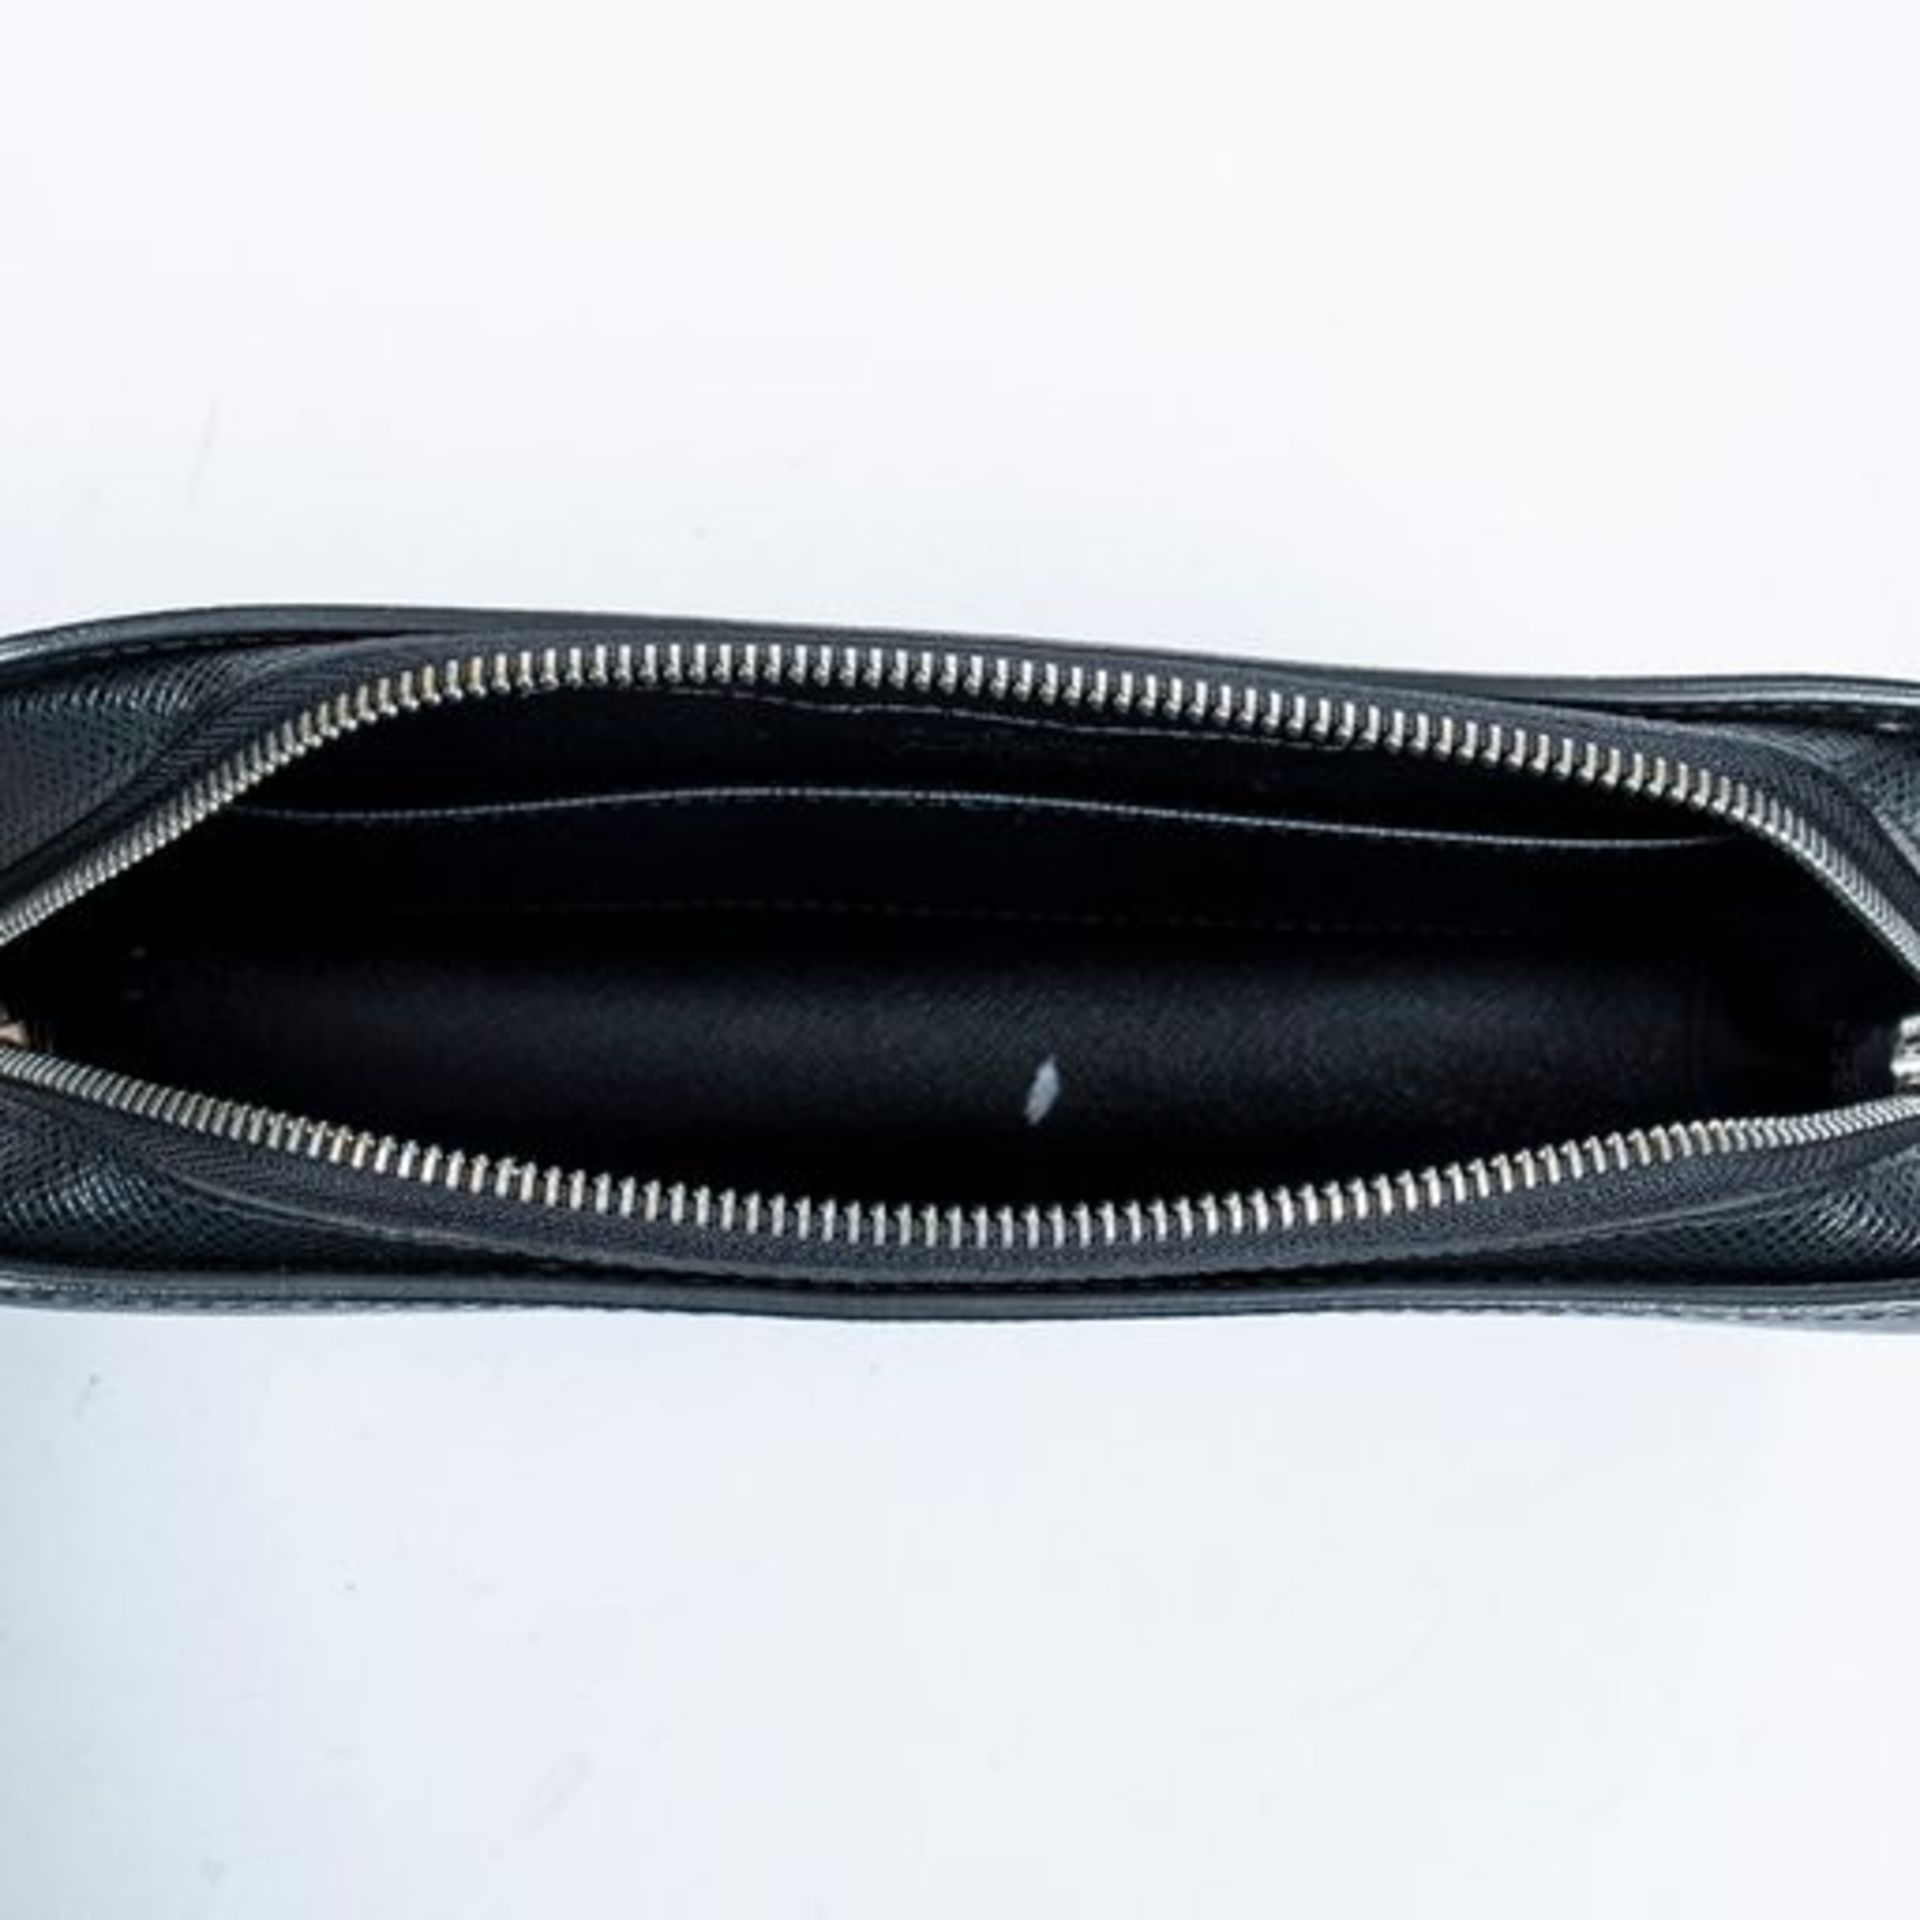 RRP £875.00 Lot To Contain 1 Louis Vuitton Calf Leather Pochette Baikal Handbag In Black - 25*17*4cm - Image 2 of 3